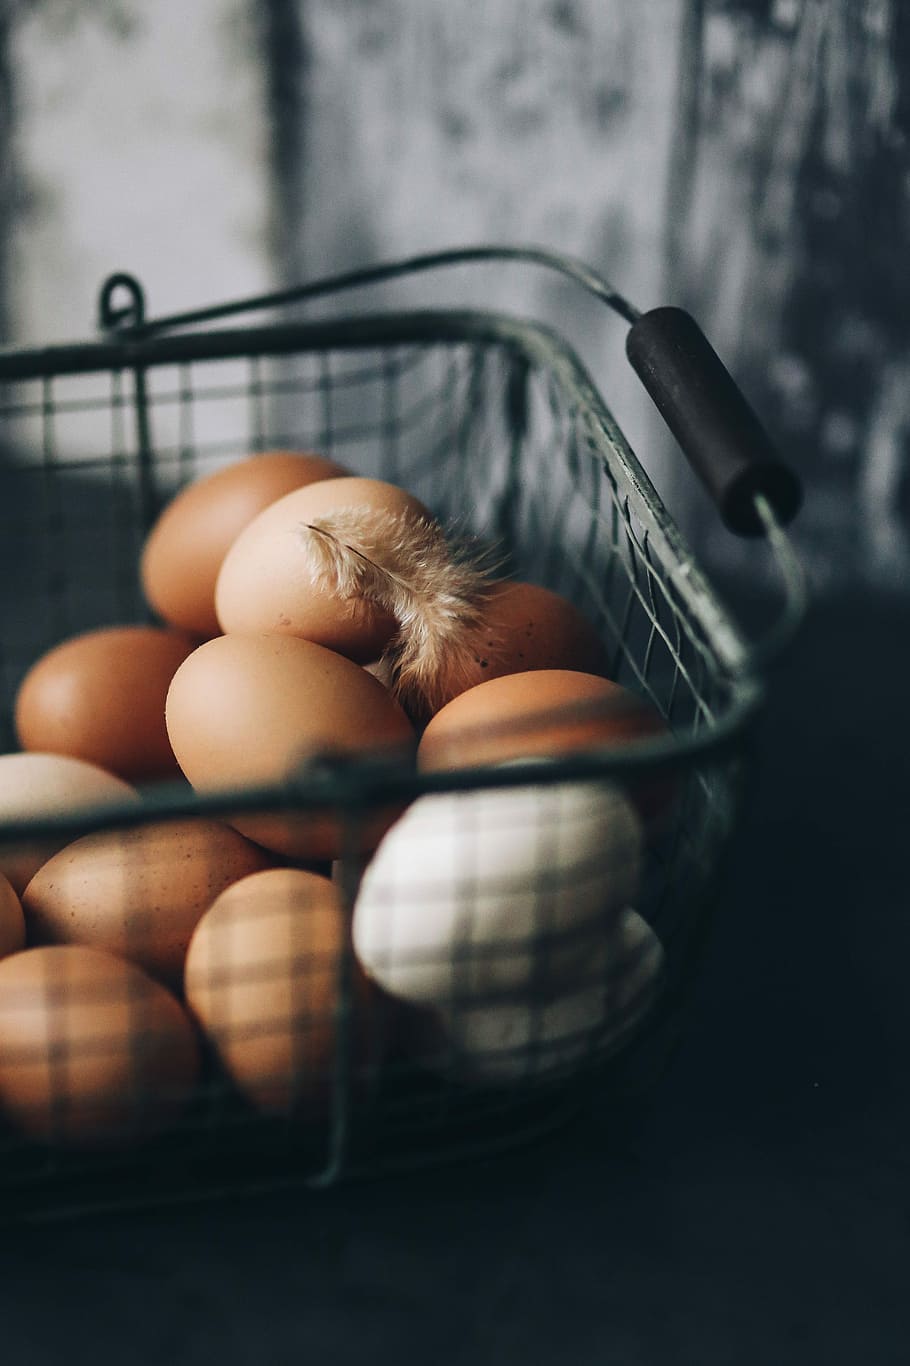 metal wire basket, eggs, Metal wire, basket, metal, wire, food, freshness, organic, nature